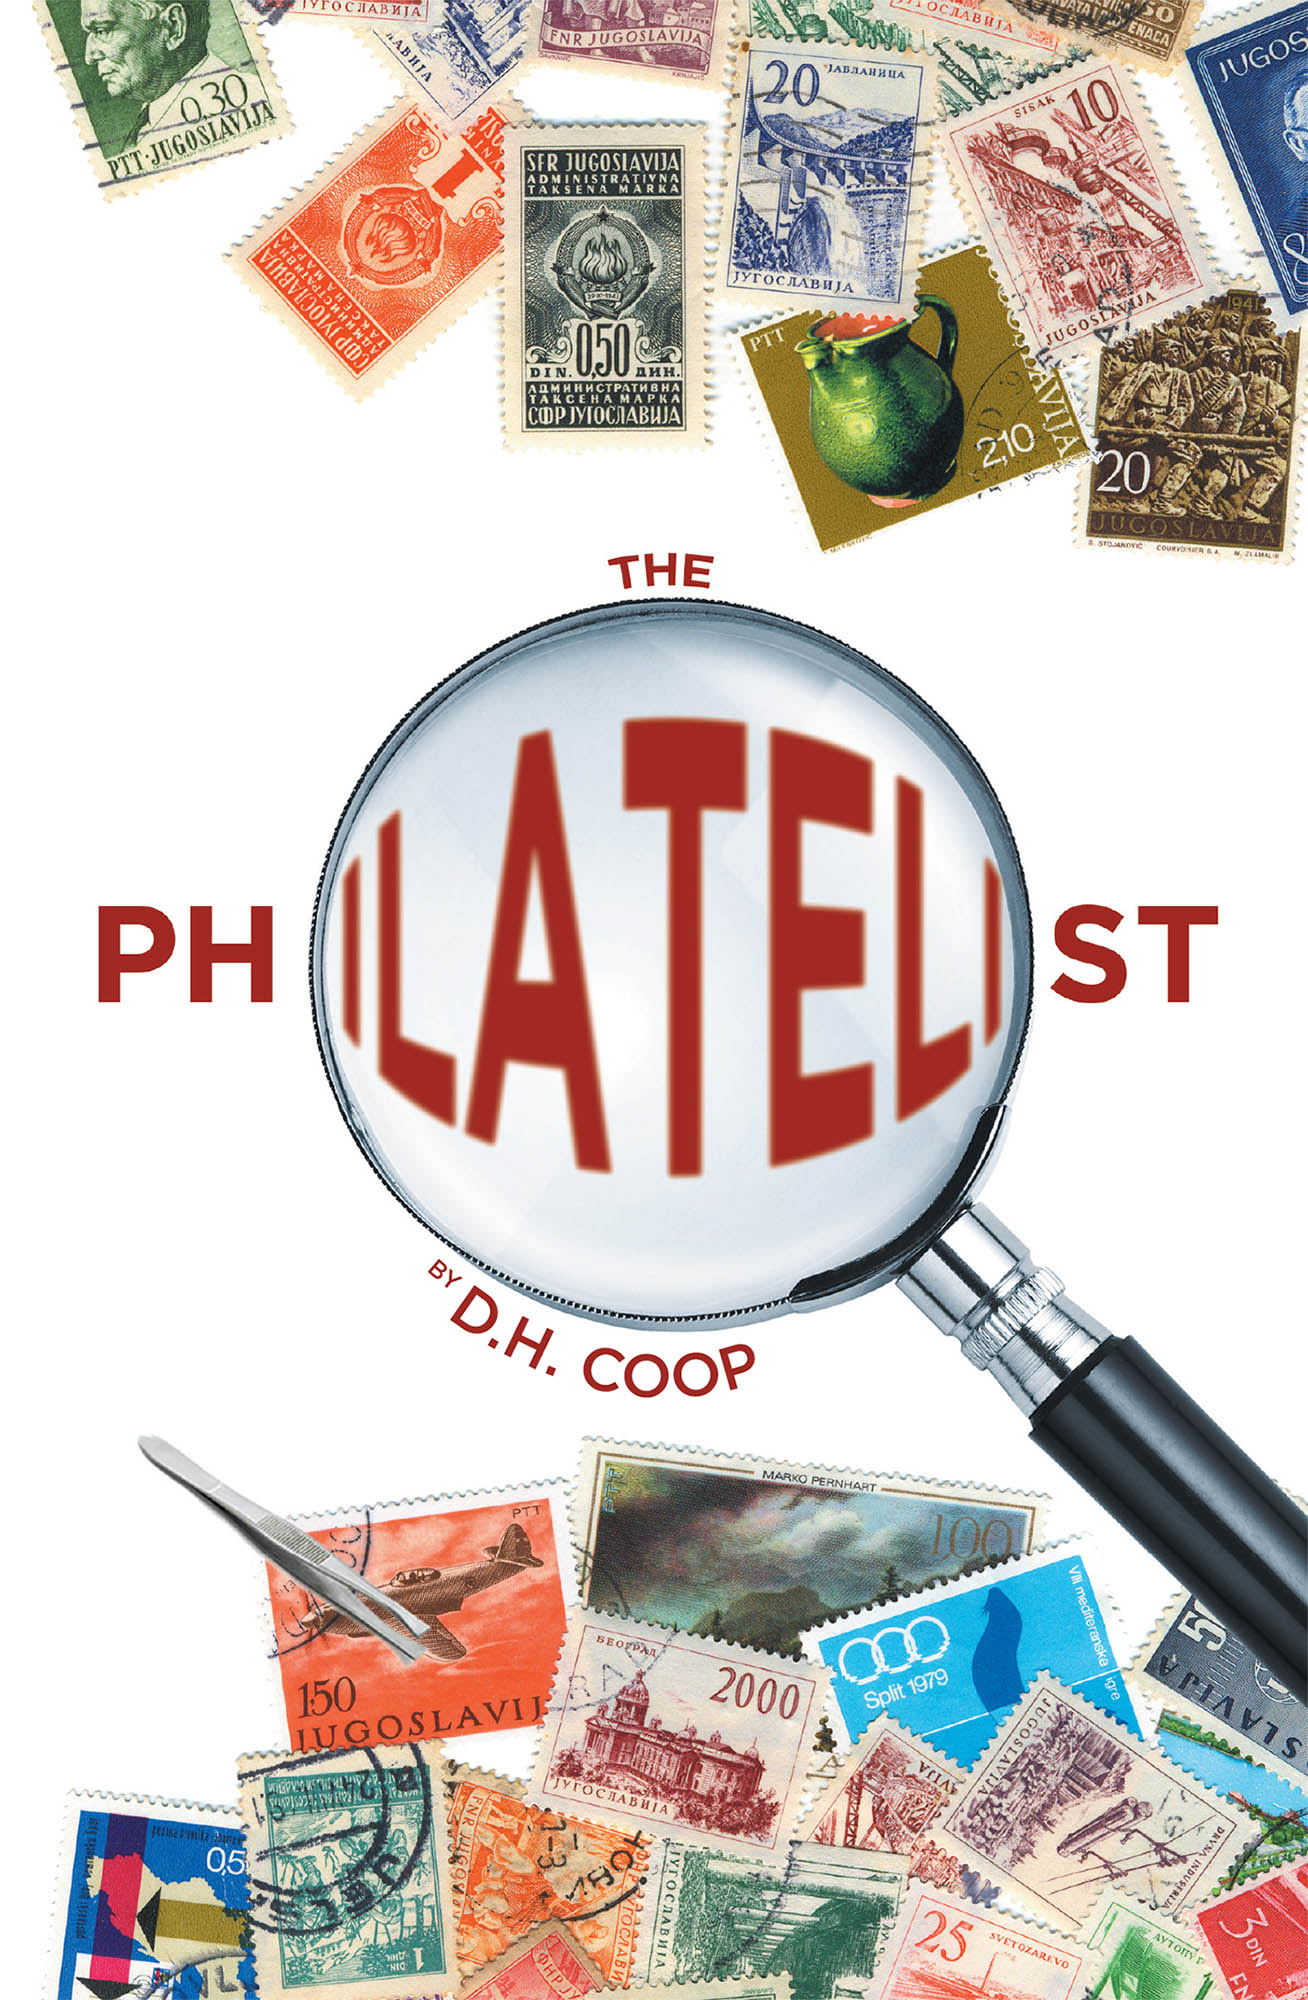 The Philatelist Cover Image